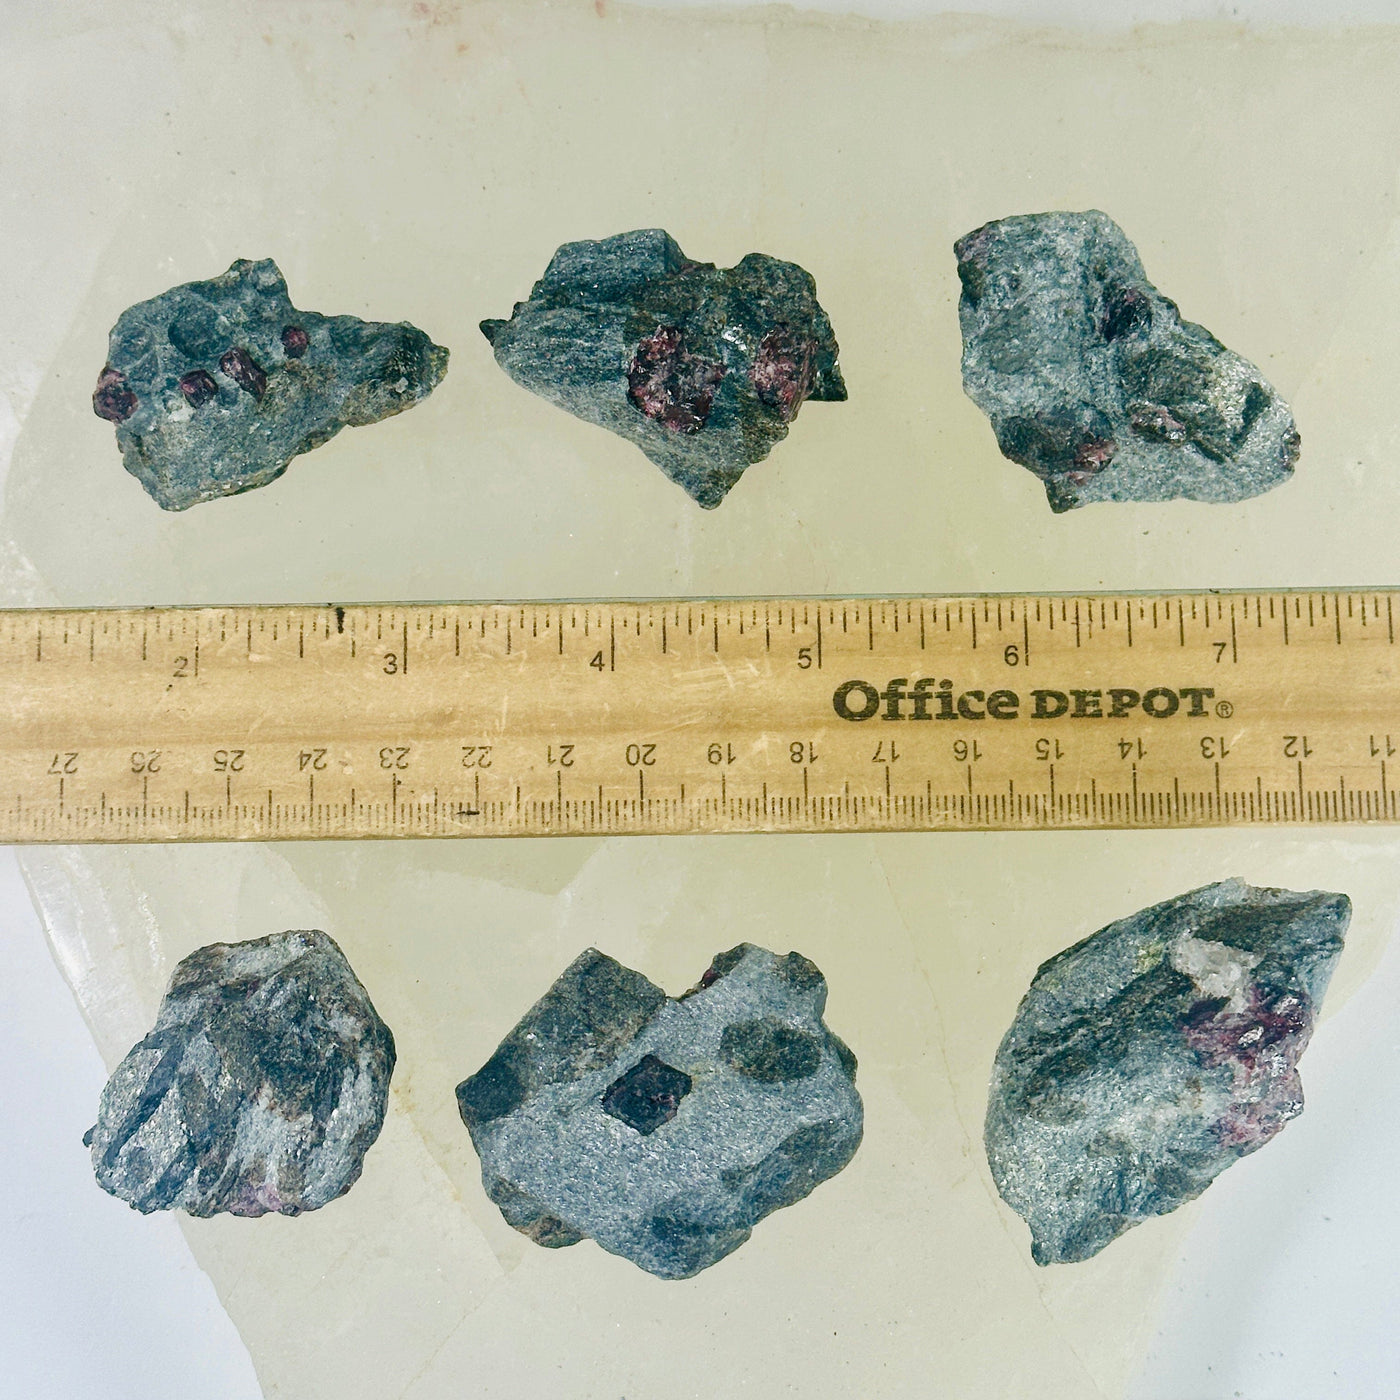  Garnet on Hematite Matrix - Natural Crystal - You Choose all variants with ruler for size reference